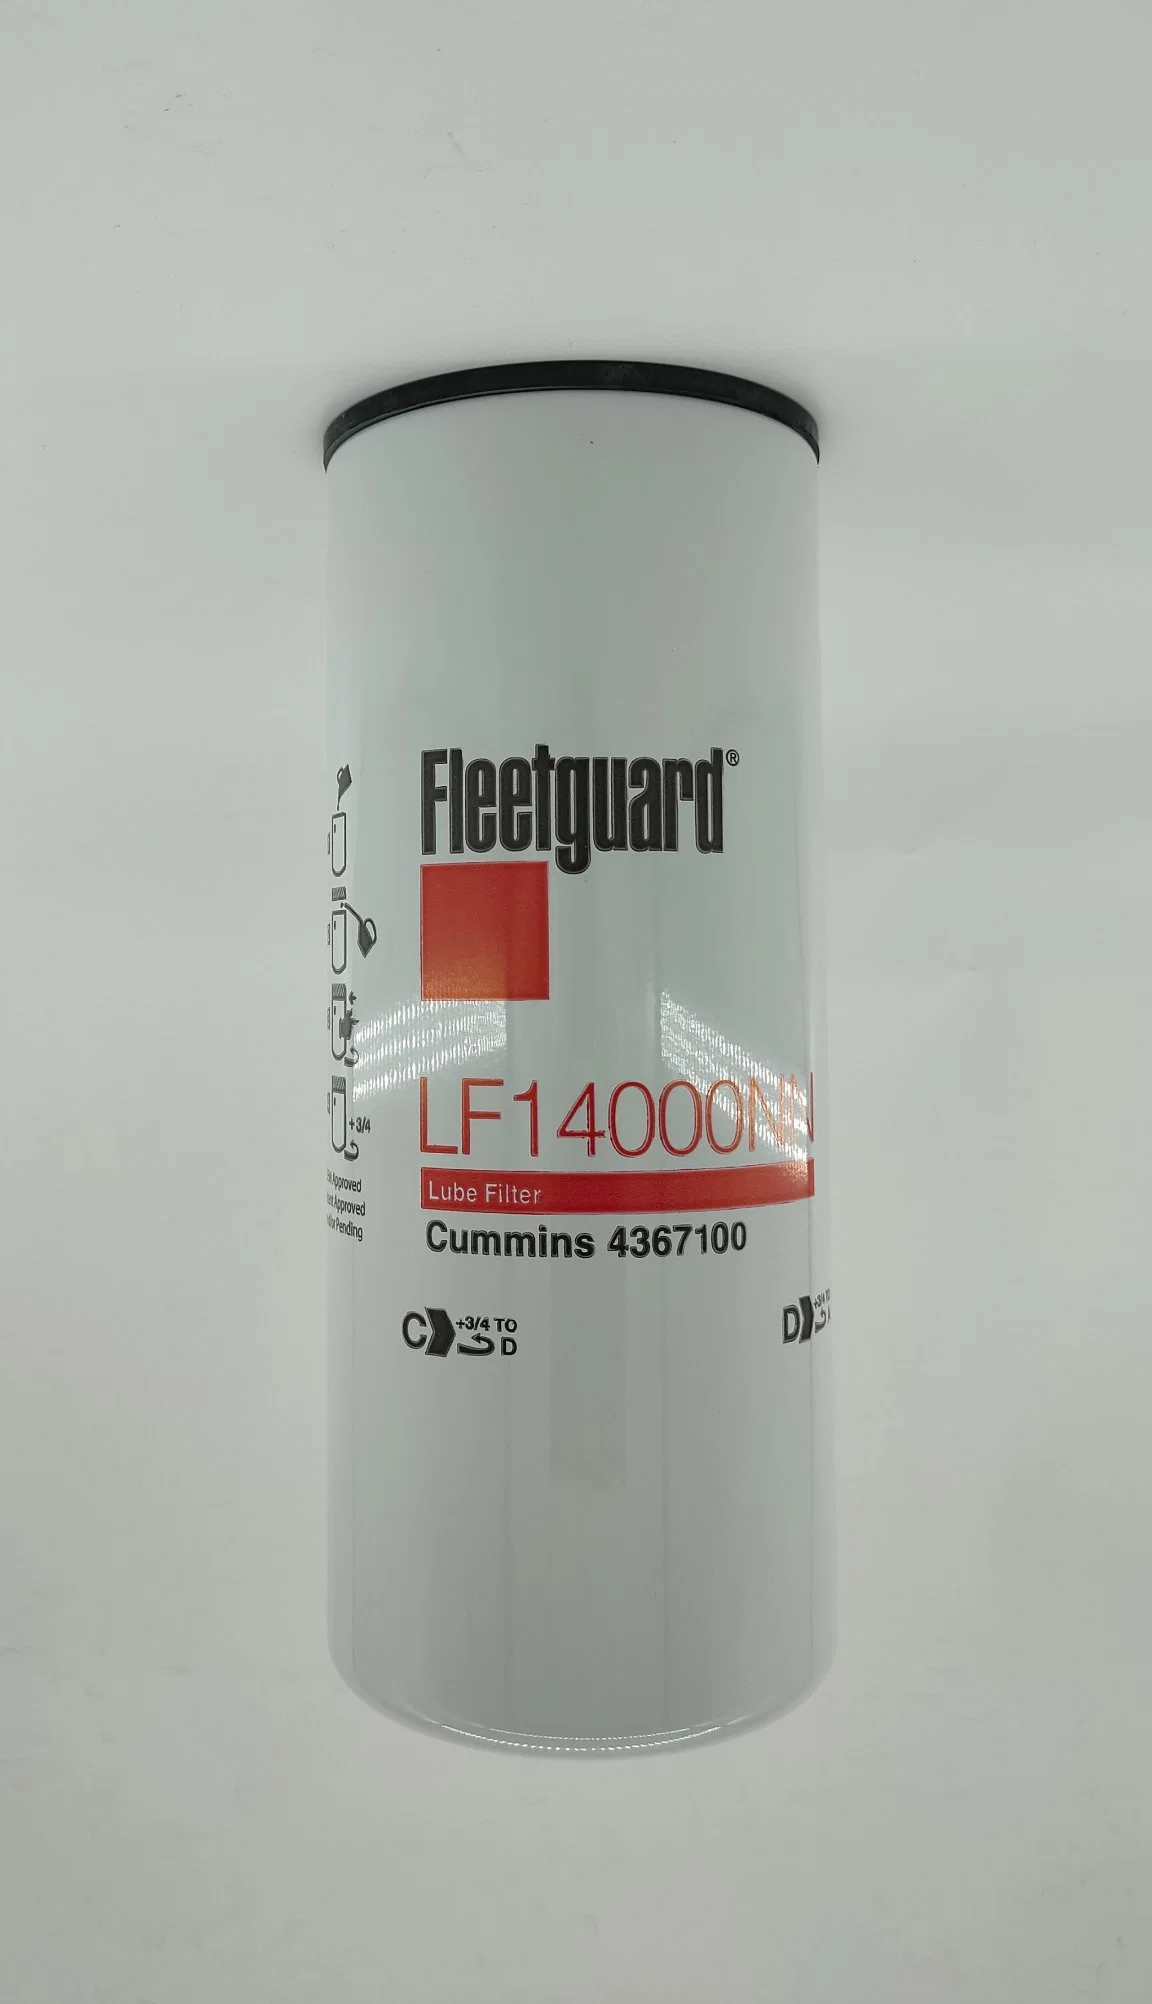 Lf14000 Fleetguard Lube Filter Lubrication Filter Oil Filter Combo Spinon Local Fuel Filter Synthentic Spinon Fuel Filter Water Filter Air Filter for Cummins